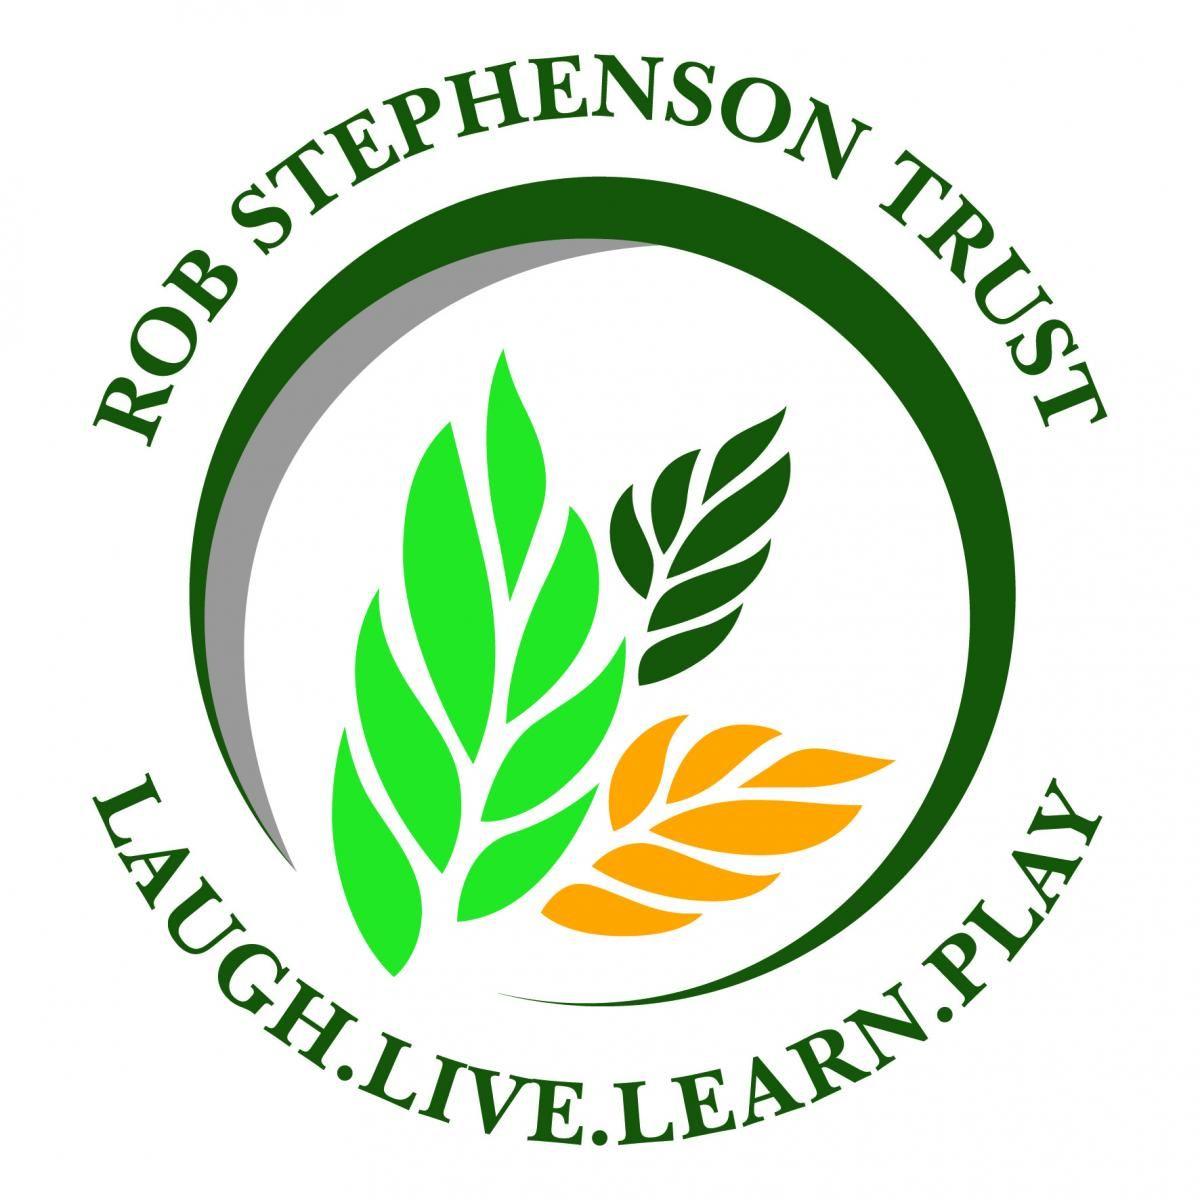 Stephenson Logo - Robert Stephenson trust fund raises £000 in first week